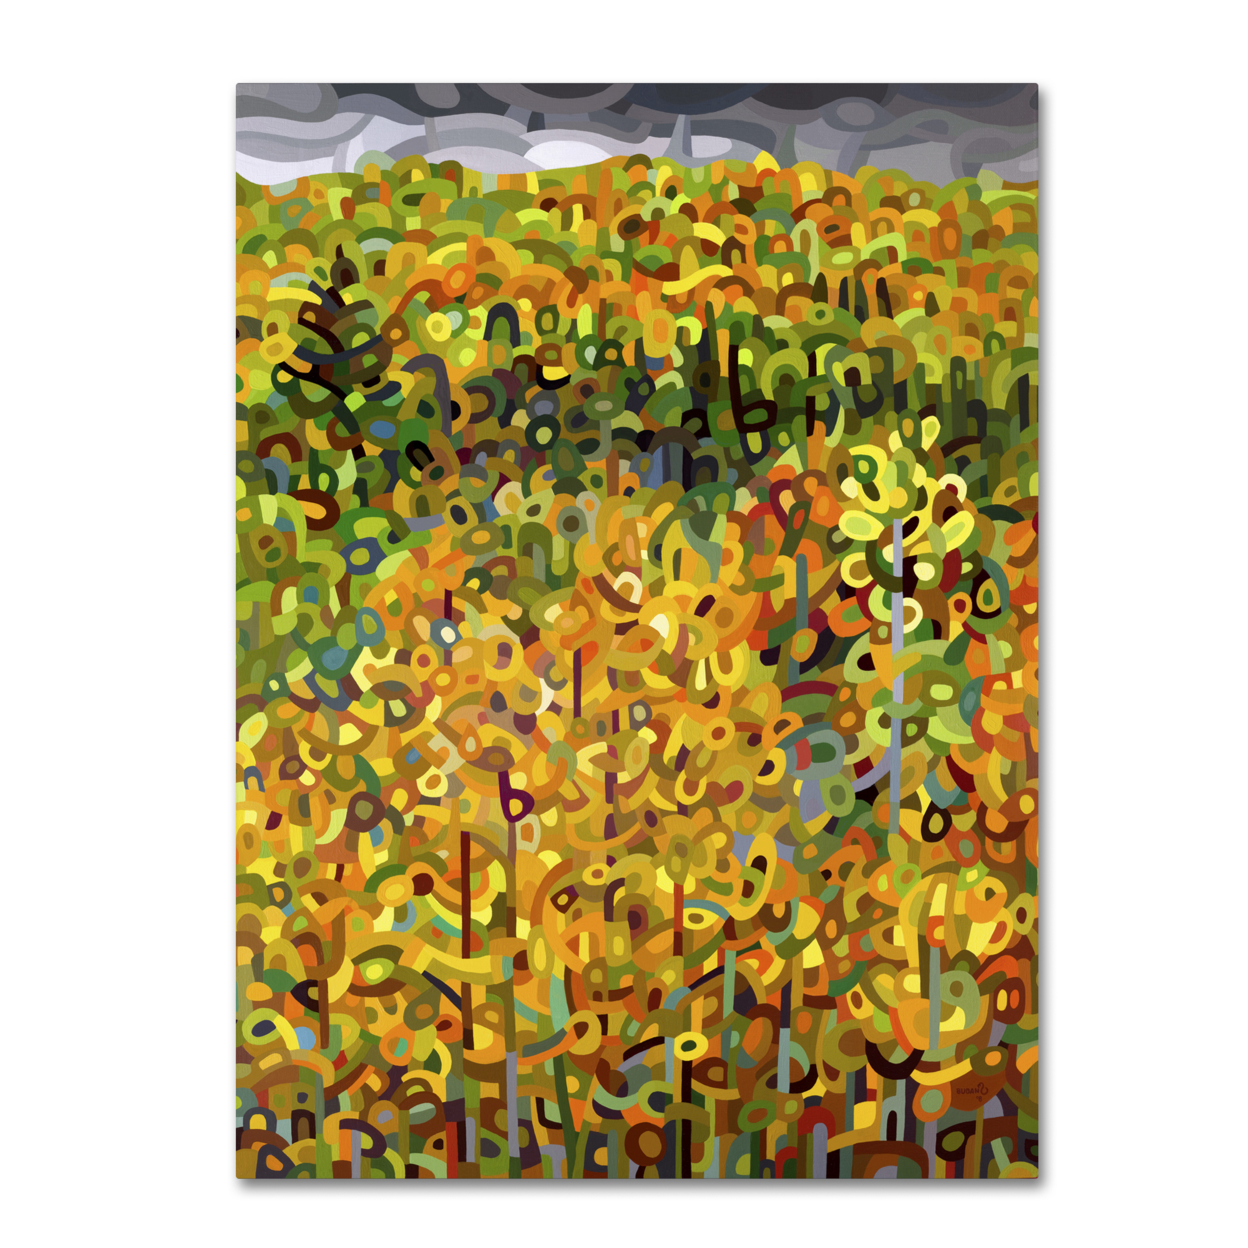 Mandy Budan 'Towards Autumn' Canvas Wall Art 35 X 47 Inches